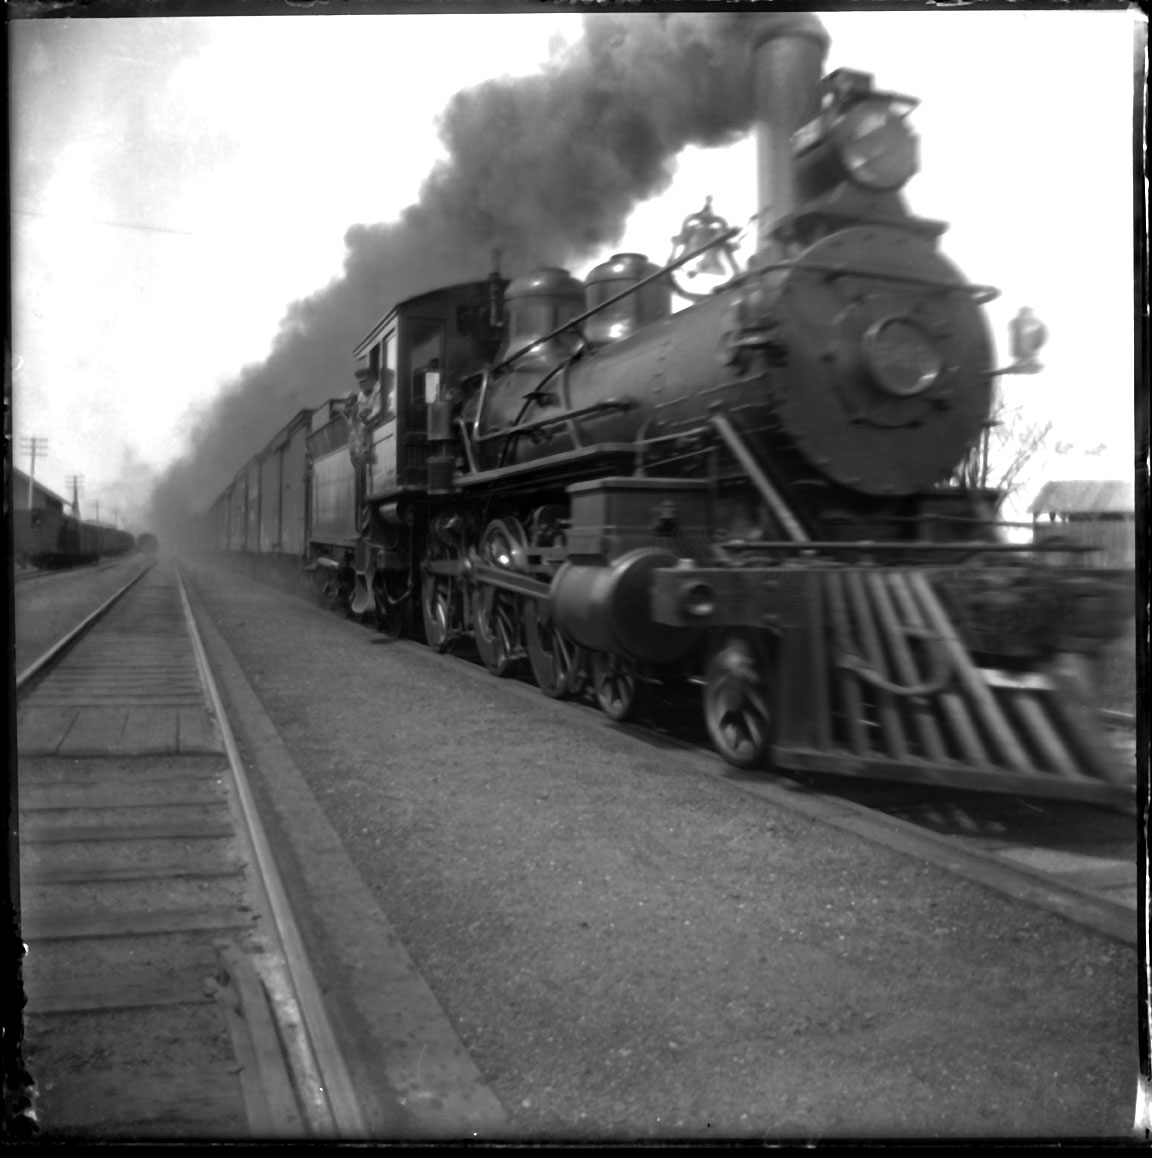 Locomotive with Smoke c.1920 from original 4x5 glass plate negative